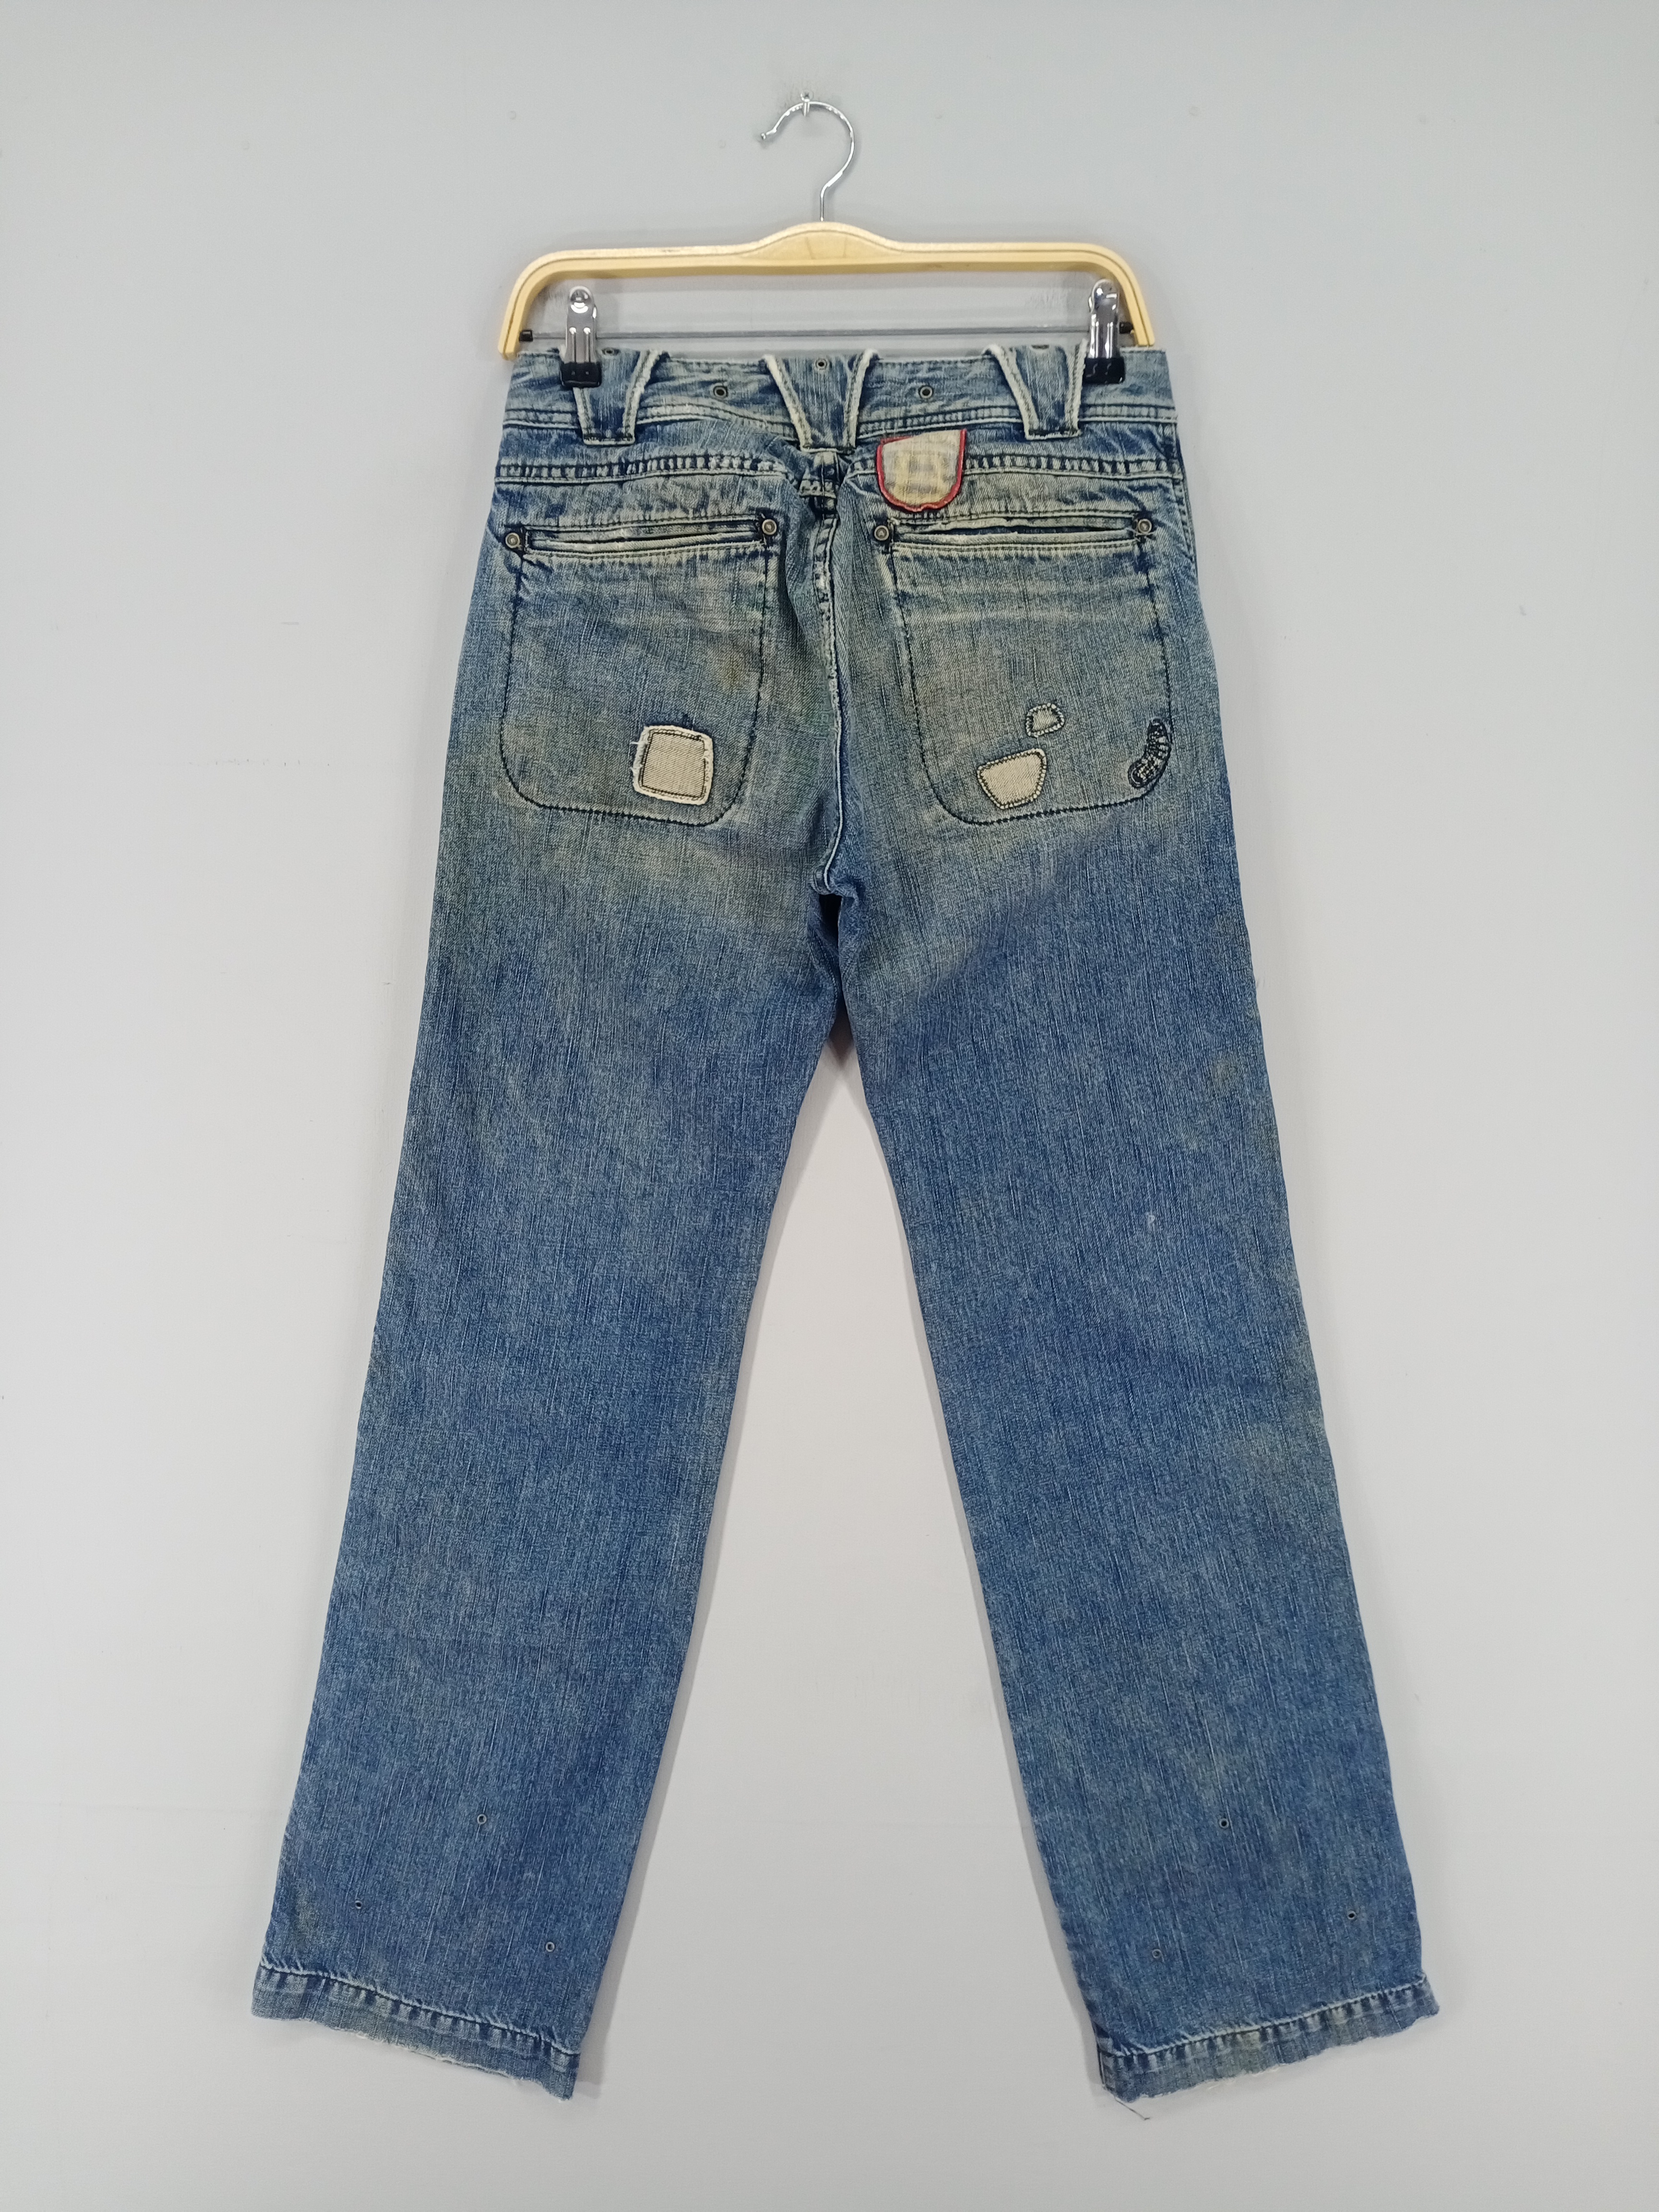 💥RARE💥Diesel Medium Wash Patches Distressed Jeans - 5